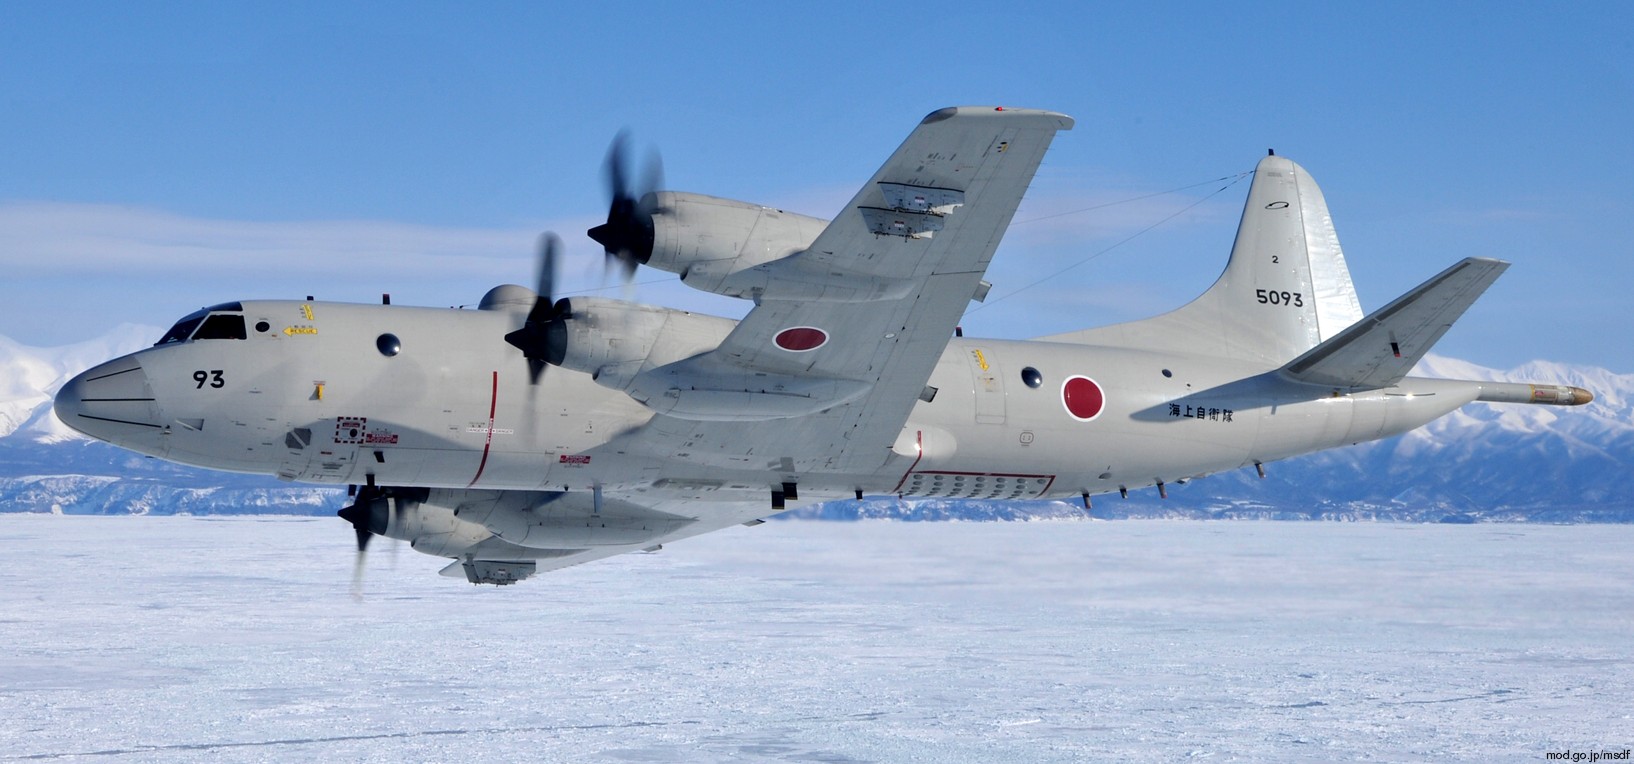 kawasaki p-3c orion patrol aircraft mpa japan maritime self defense force jmsdf 5093 03